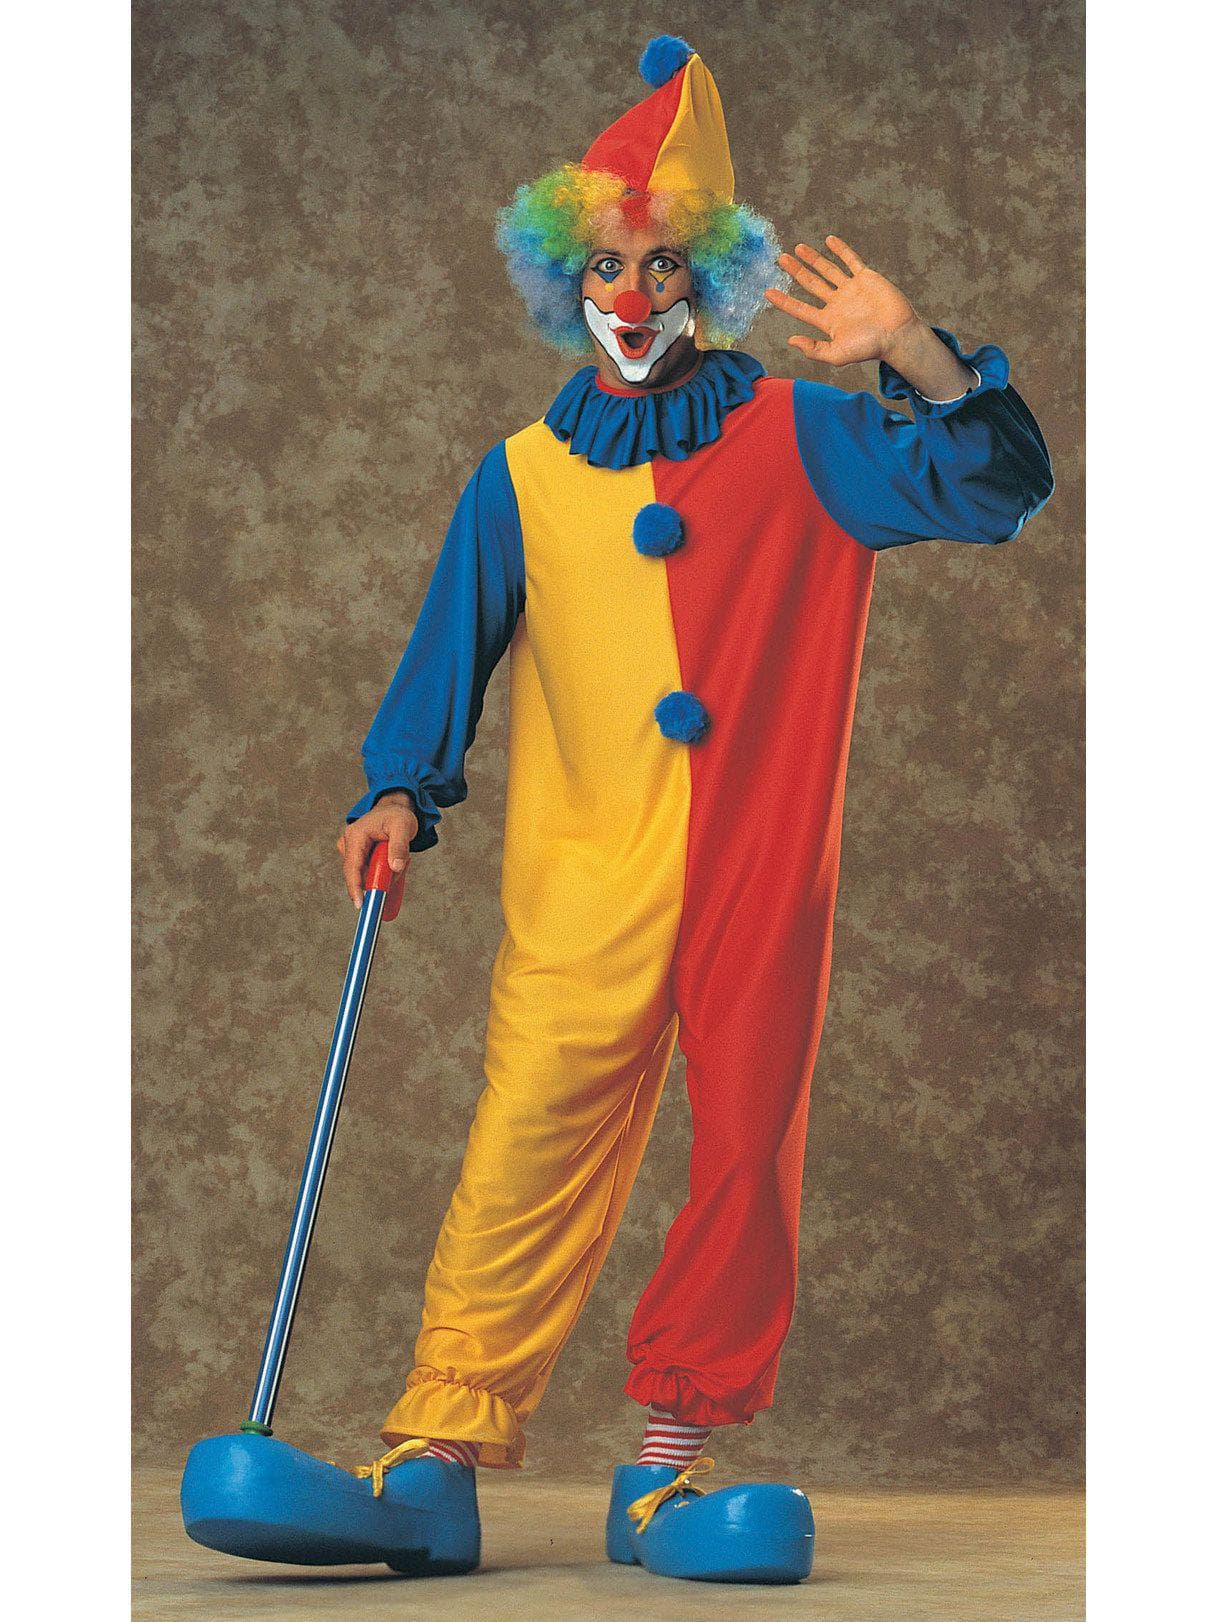 Adult Clown Costume - costumes.com